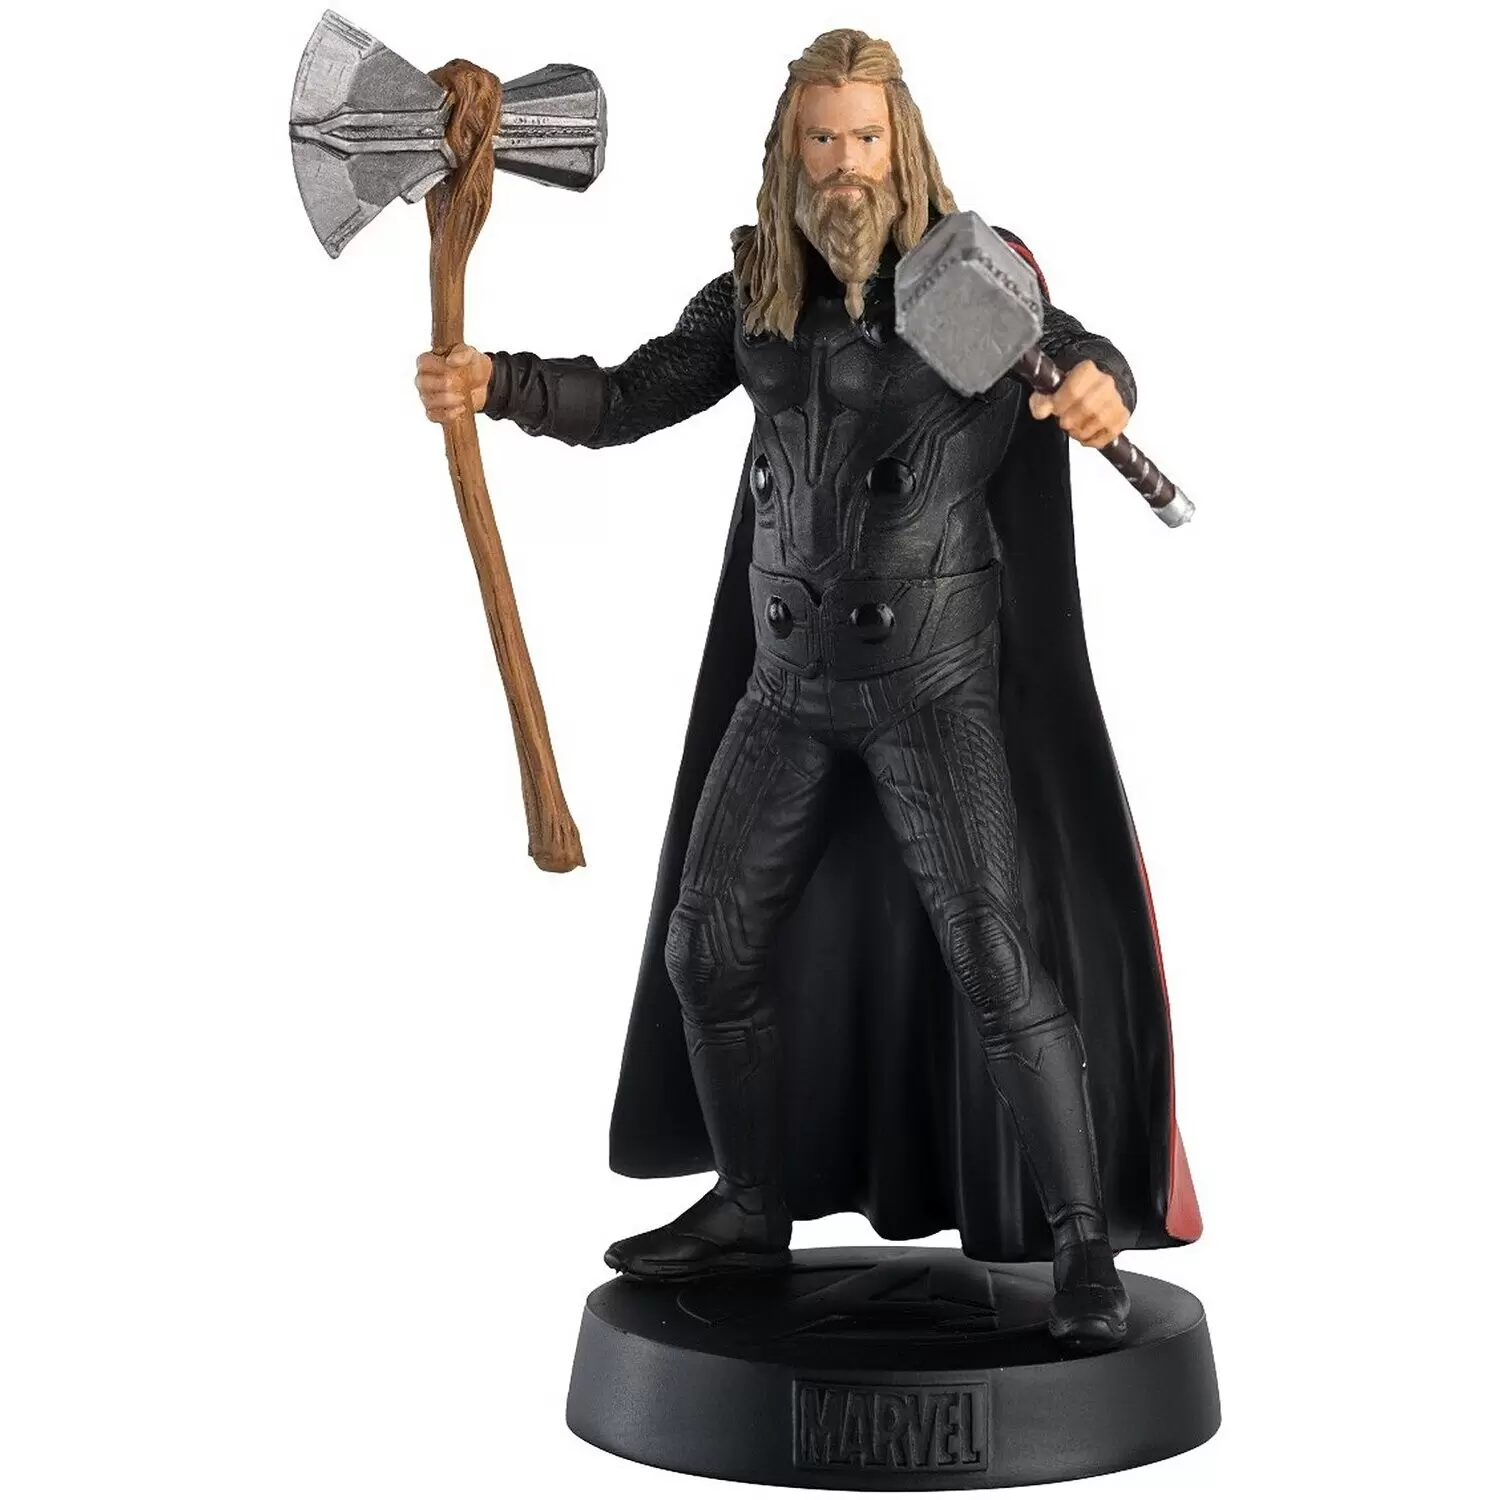 Figurines des films Marvel - Thor Figurine (Avengers: Endgame)